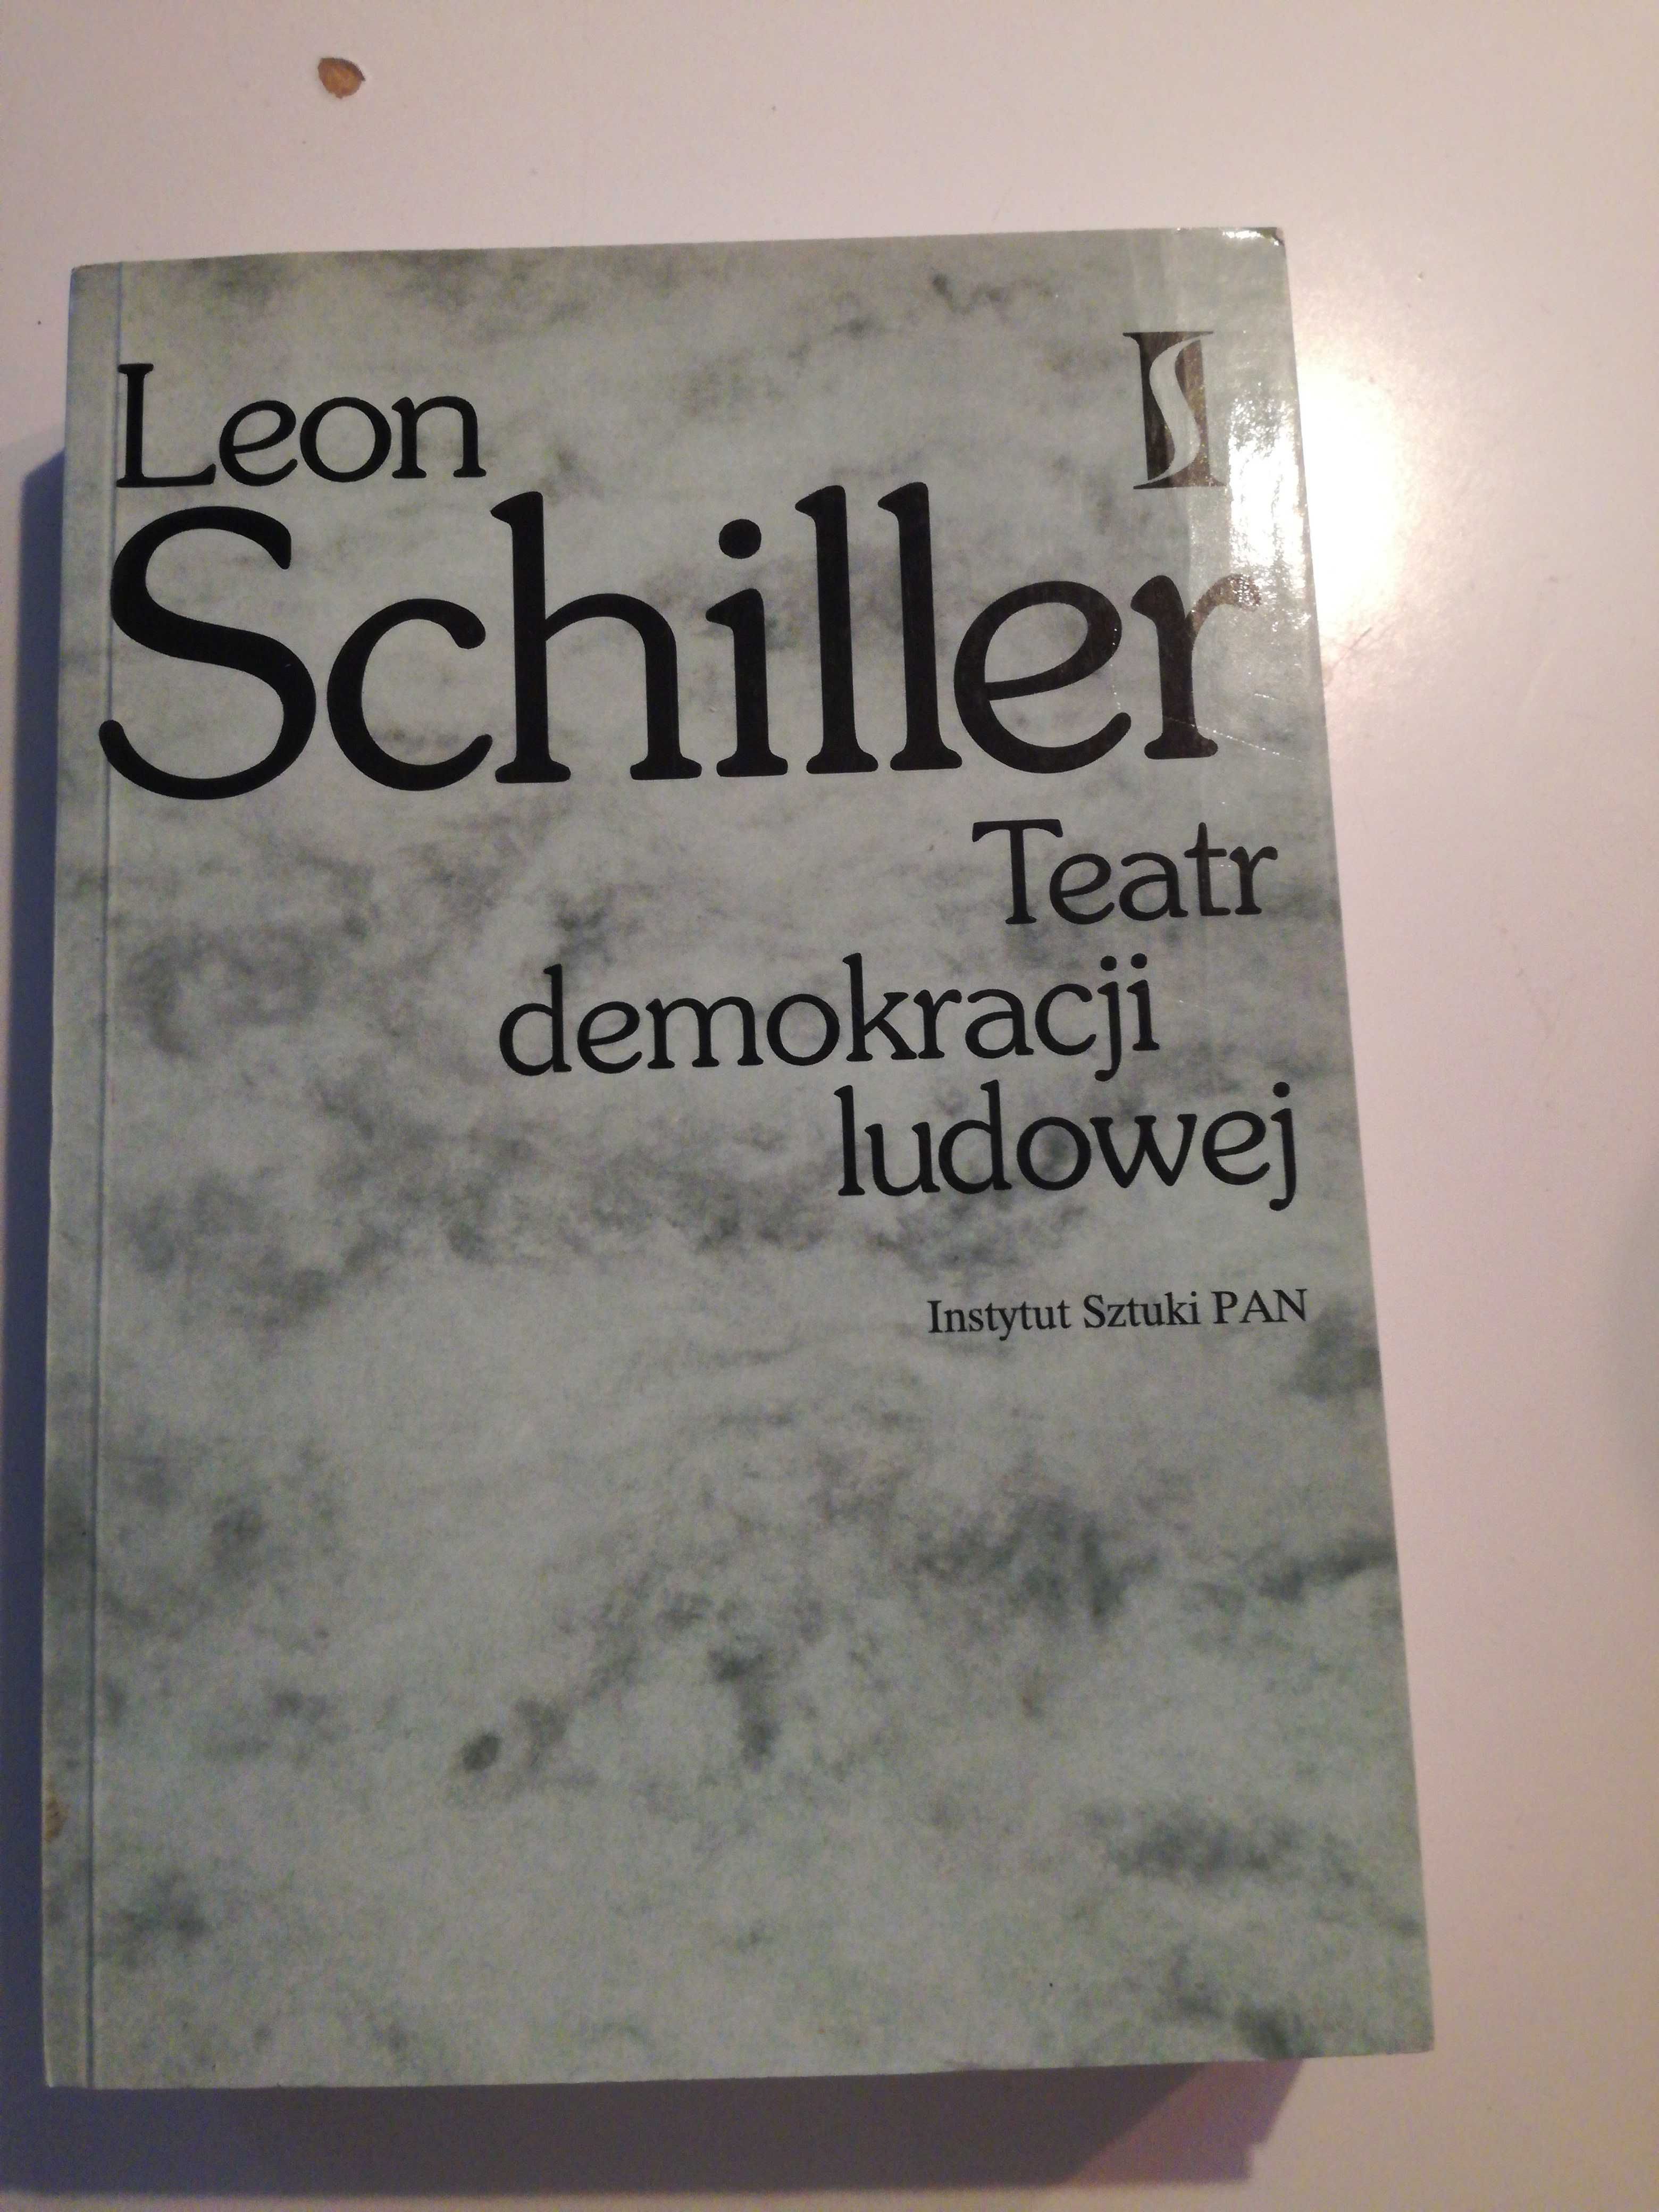 Leon Schiller Teatr demokracji ludowej